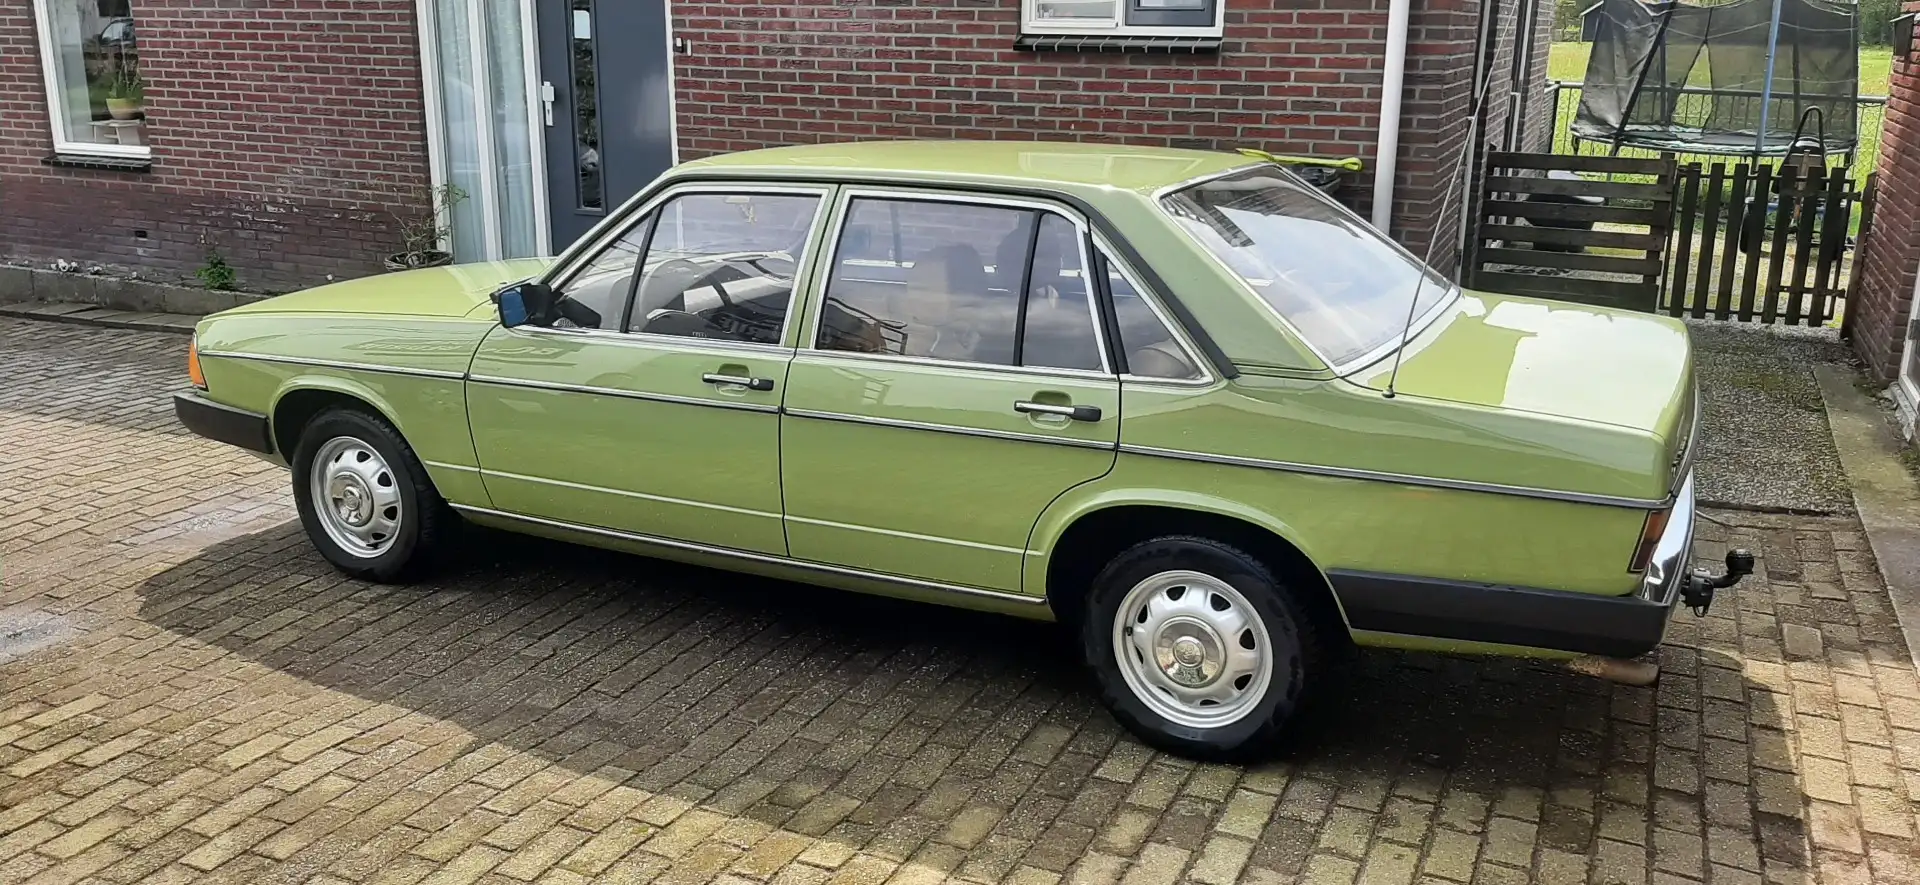 Audi 100 ls Green - 2